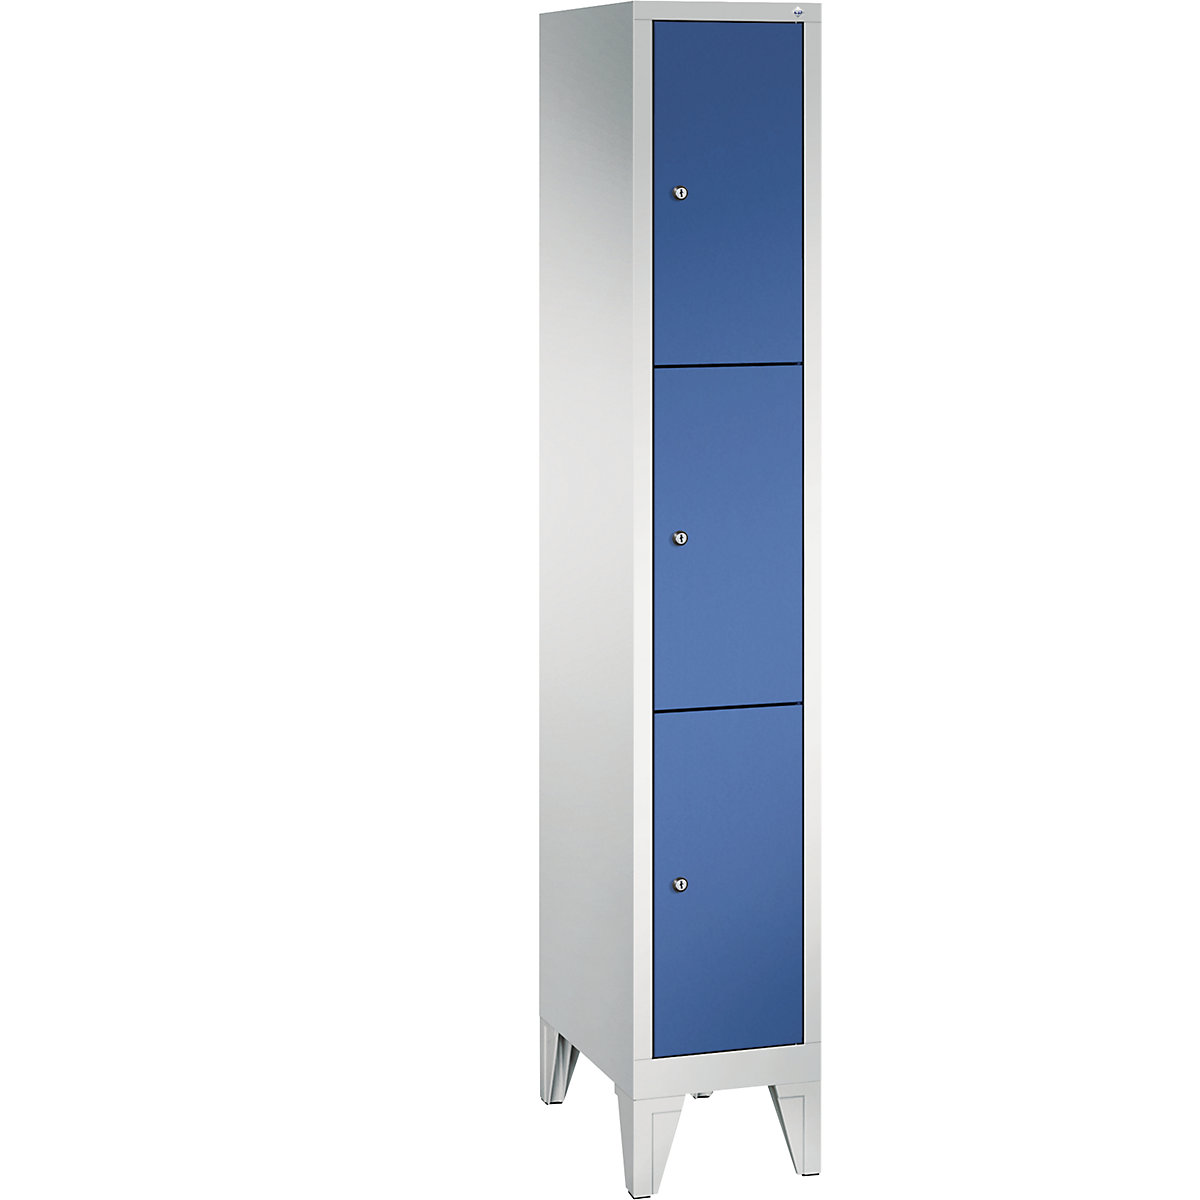 CLASSIC locker unit with feet – C+P, 1 compartment, 3 shelf compartments, compartment width 300 mm, light grey / gentian blue-11